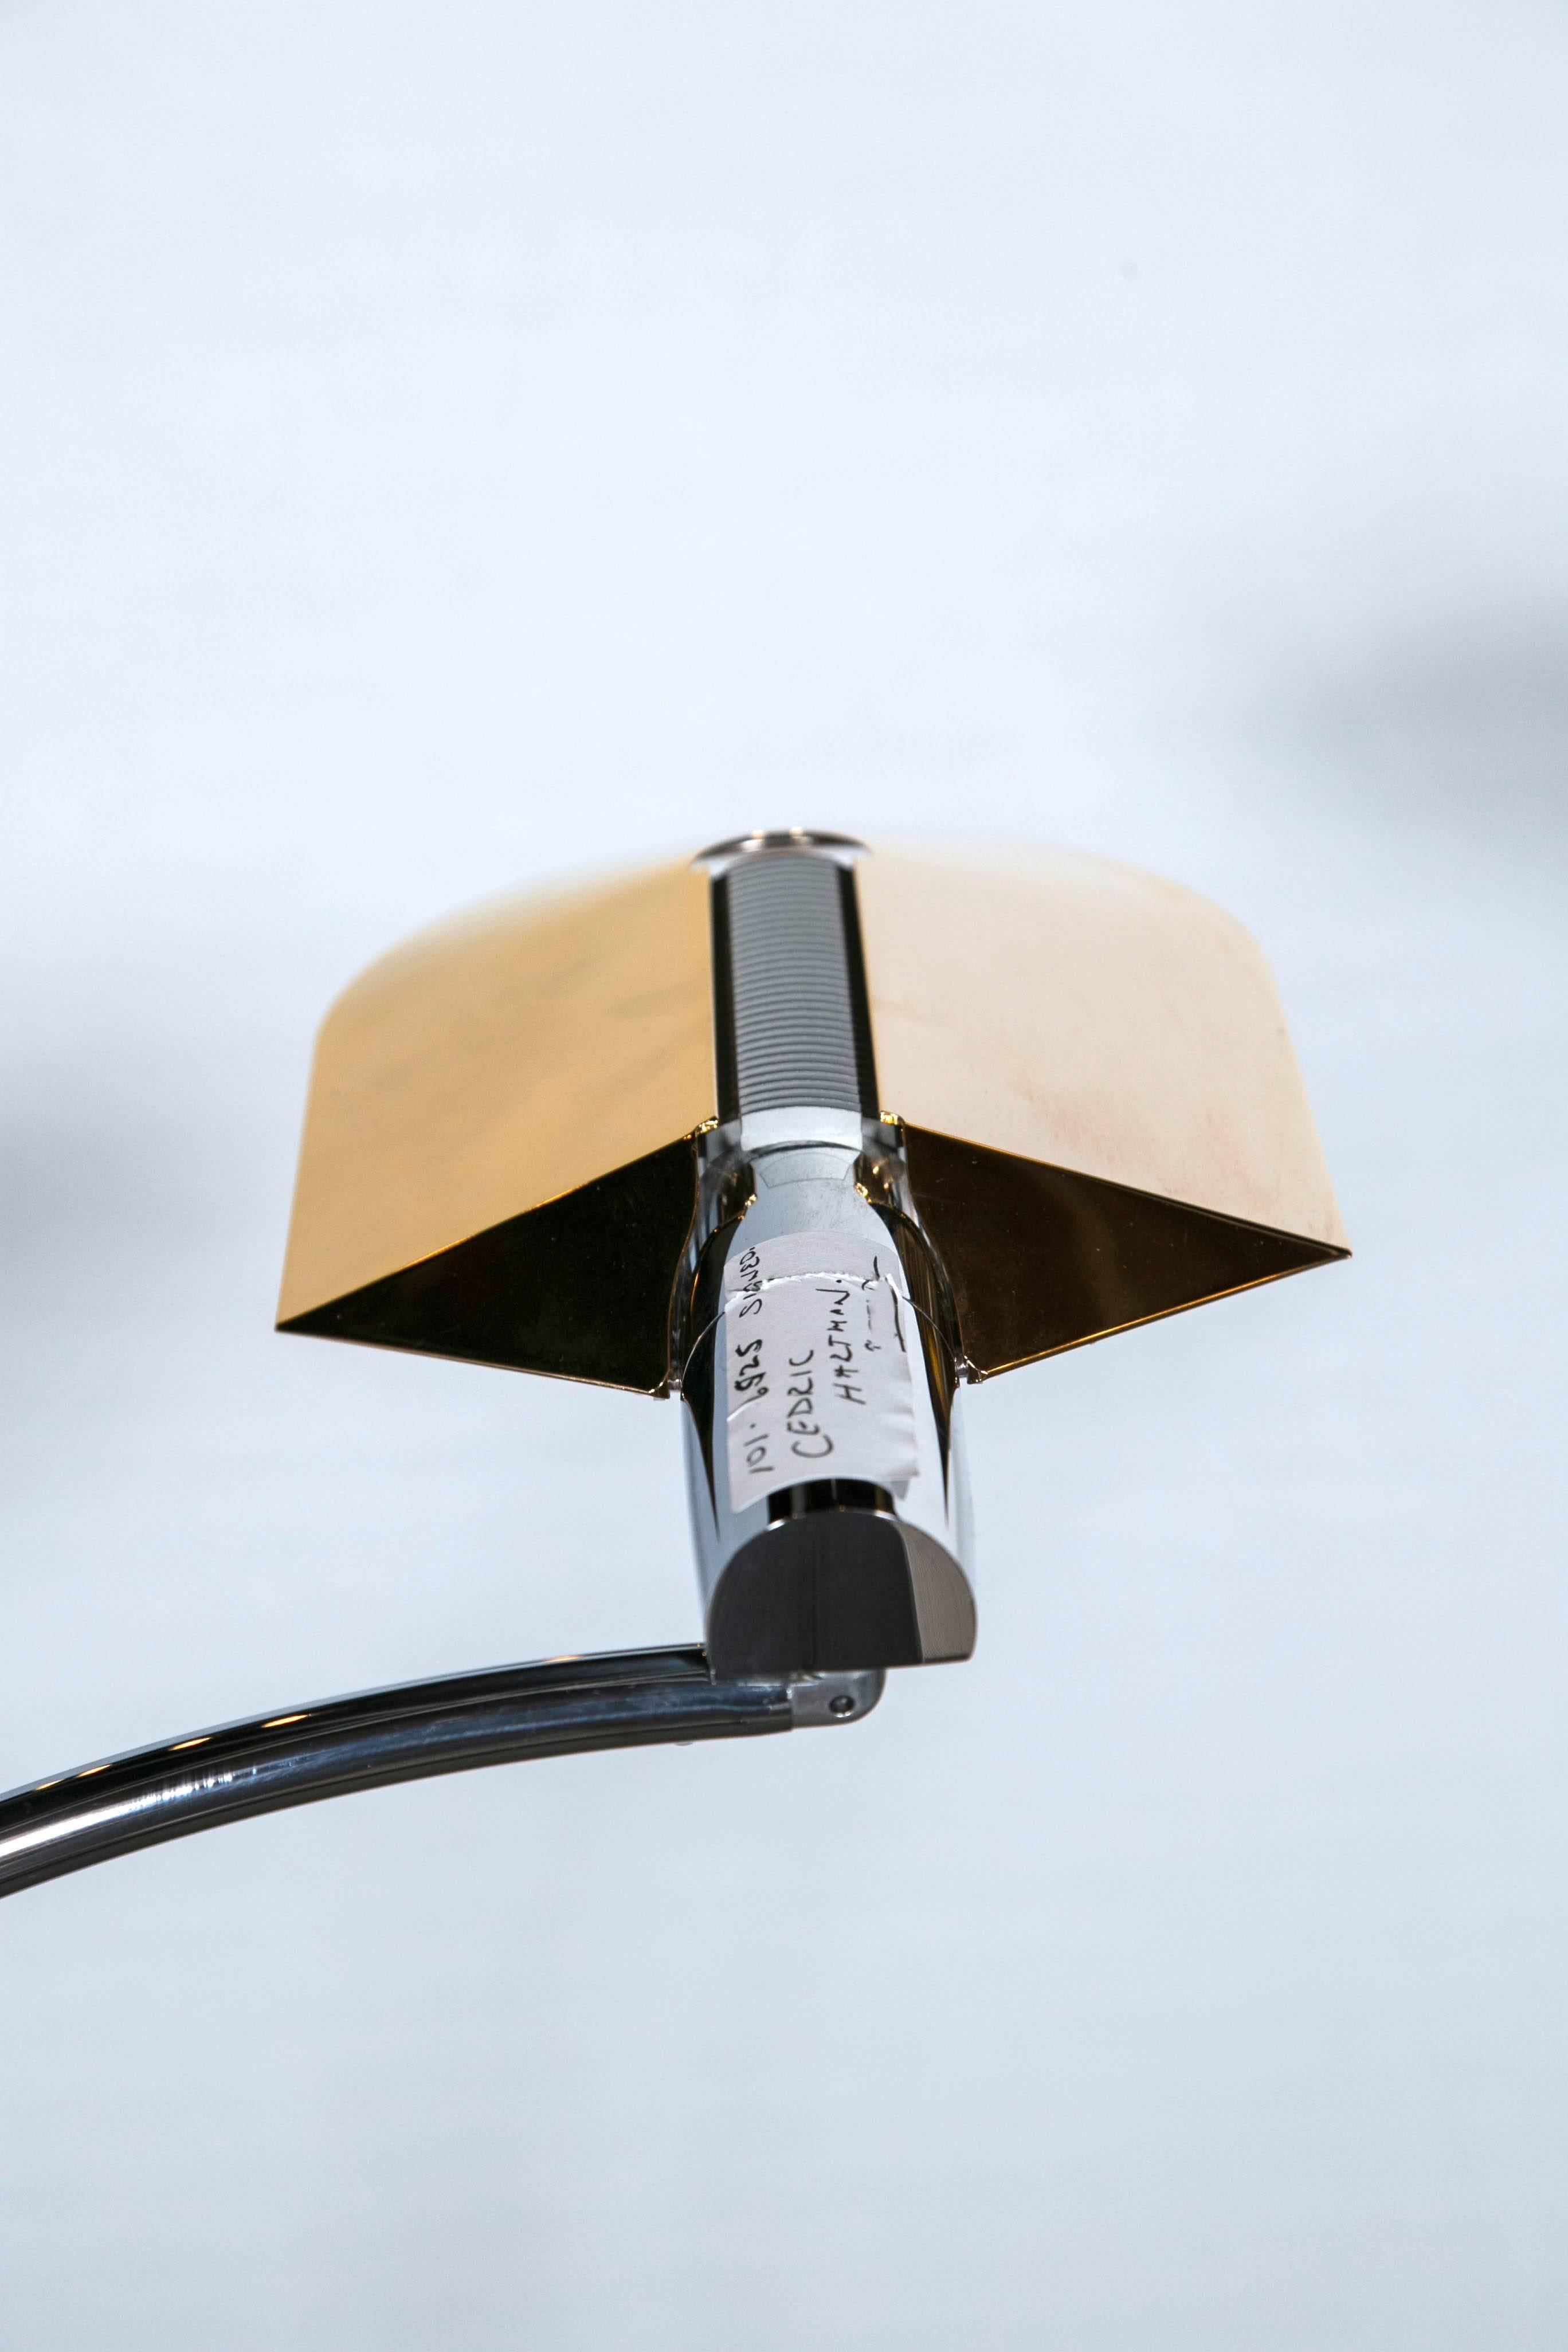 20th Century Cedric Hartman Adjustable Height Floor Lamp Swivel-Tilt Shade Signed Stamped